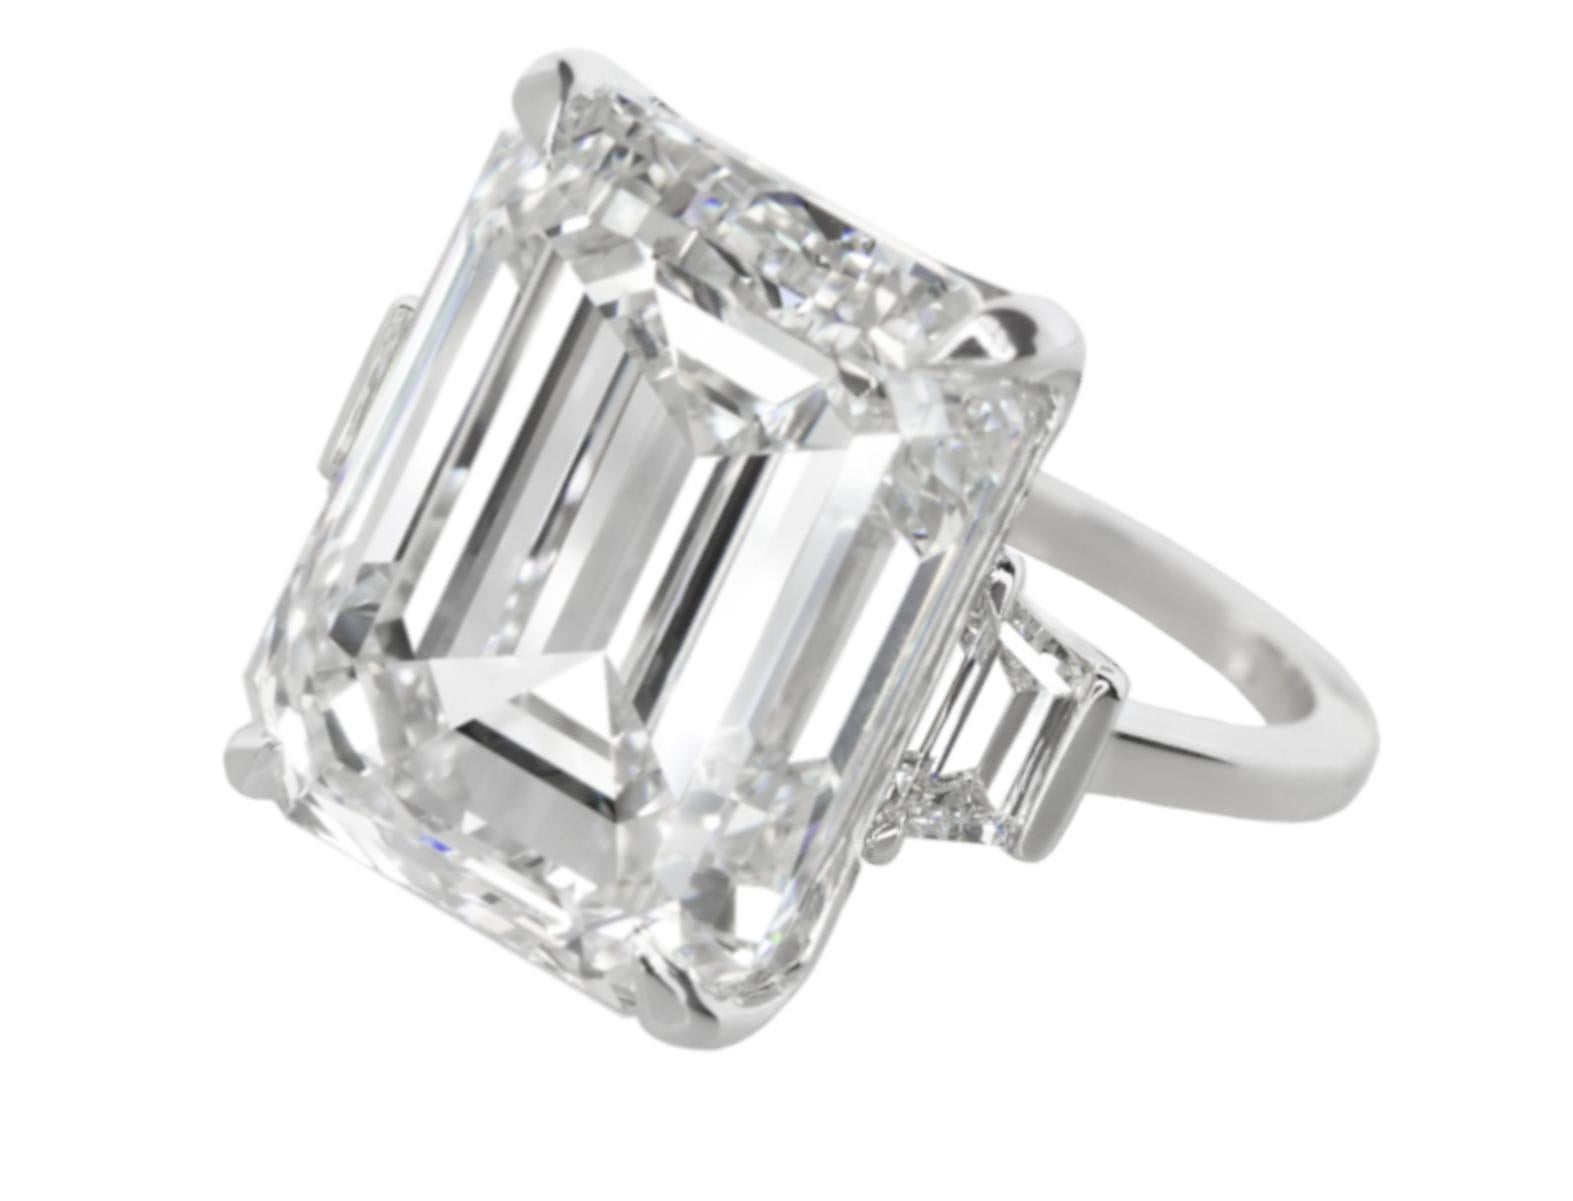 GIA 10.68 carat emerald cut Diamond Ring
vvs1  clarity diamond
i color
Excellent Polish
Excellent Symmetry
None Fluorescence
